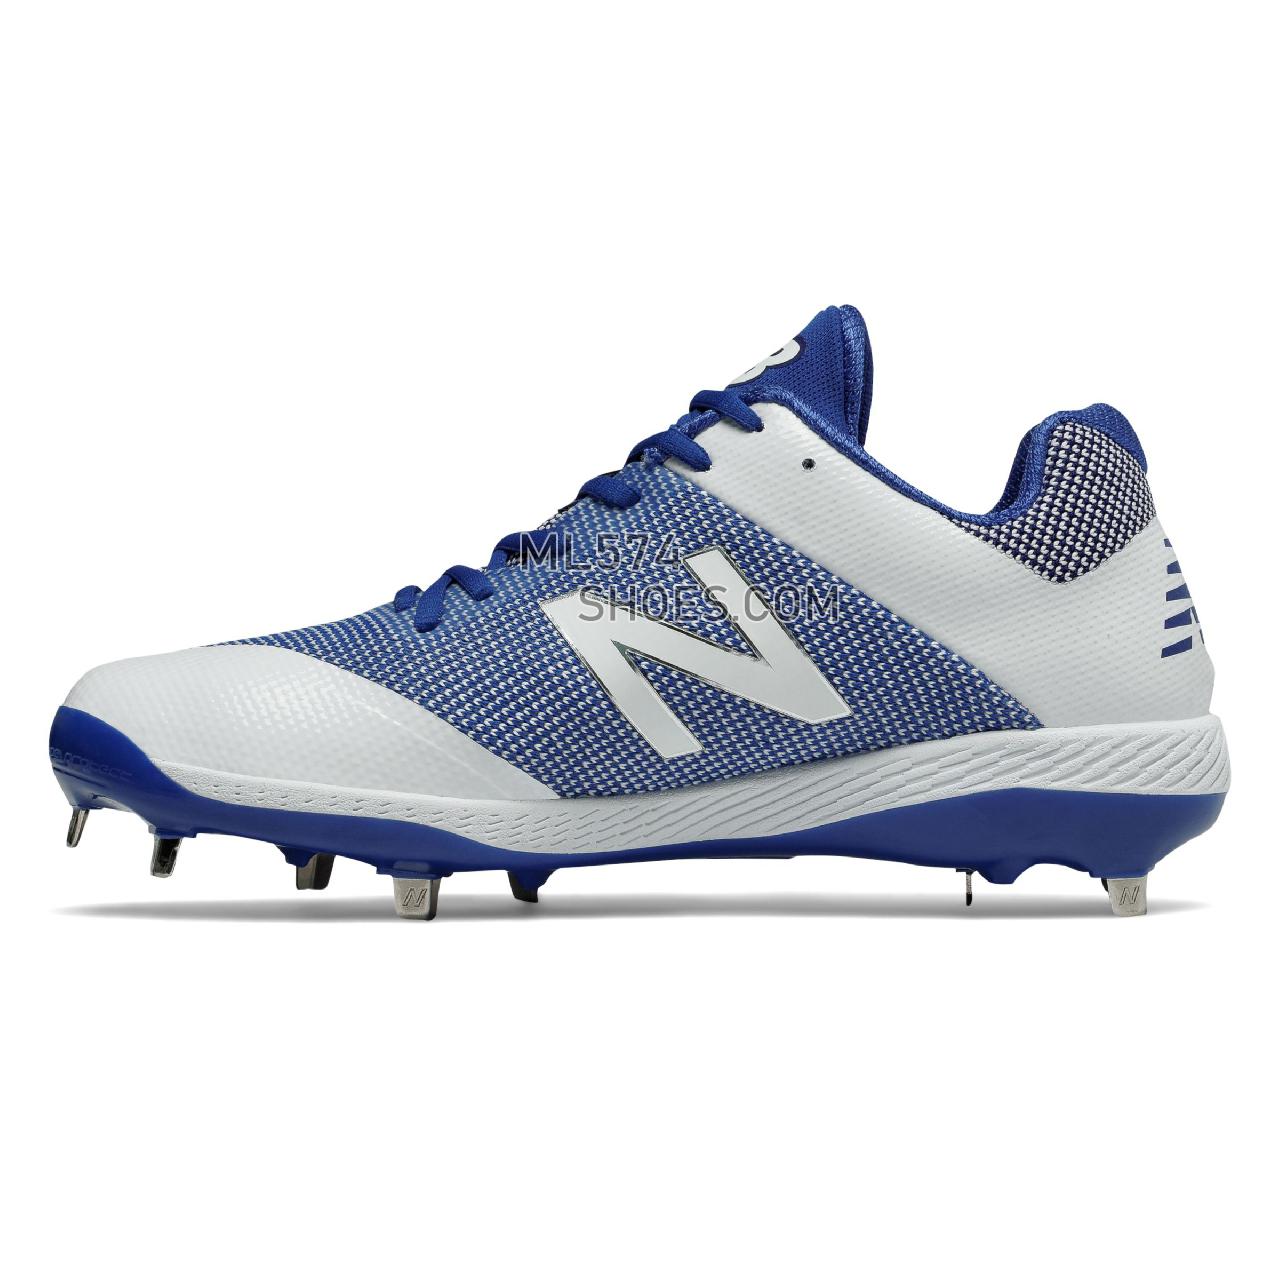 New Balance 4040v4 - Men's 4040 - Baseball Royal Blue with White - L4040TB4